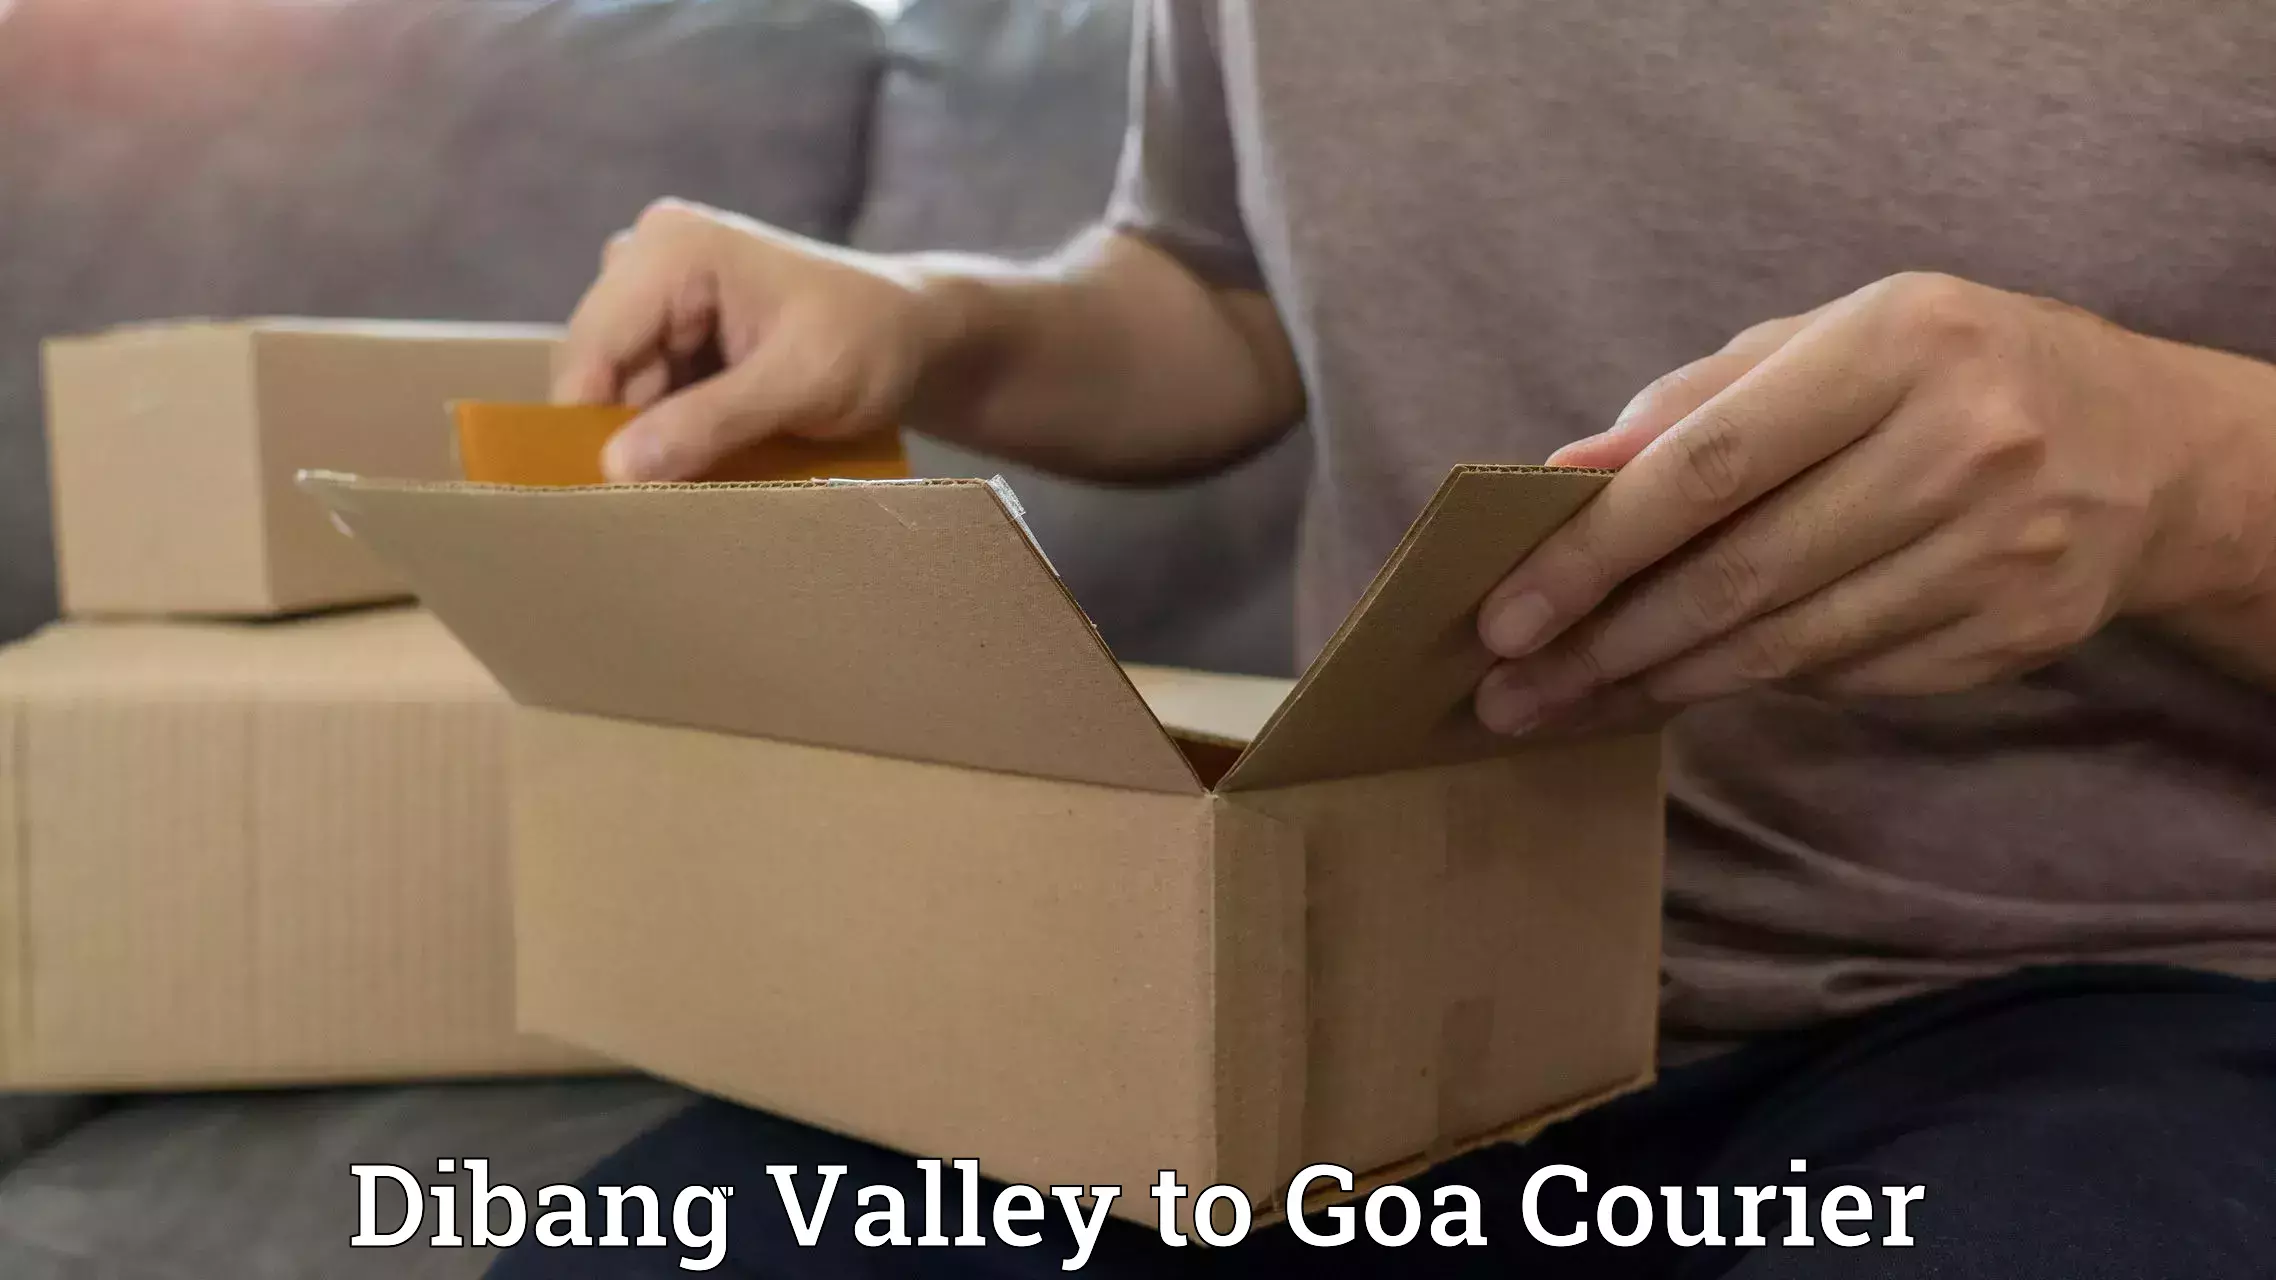 Courier service partnerships Dibang Valley to Mormugao Port